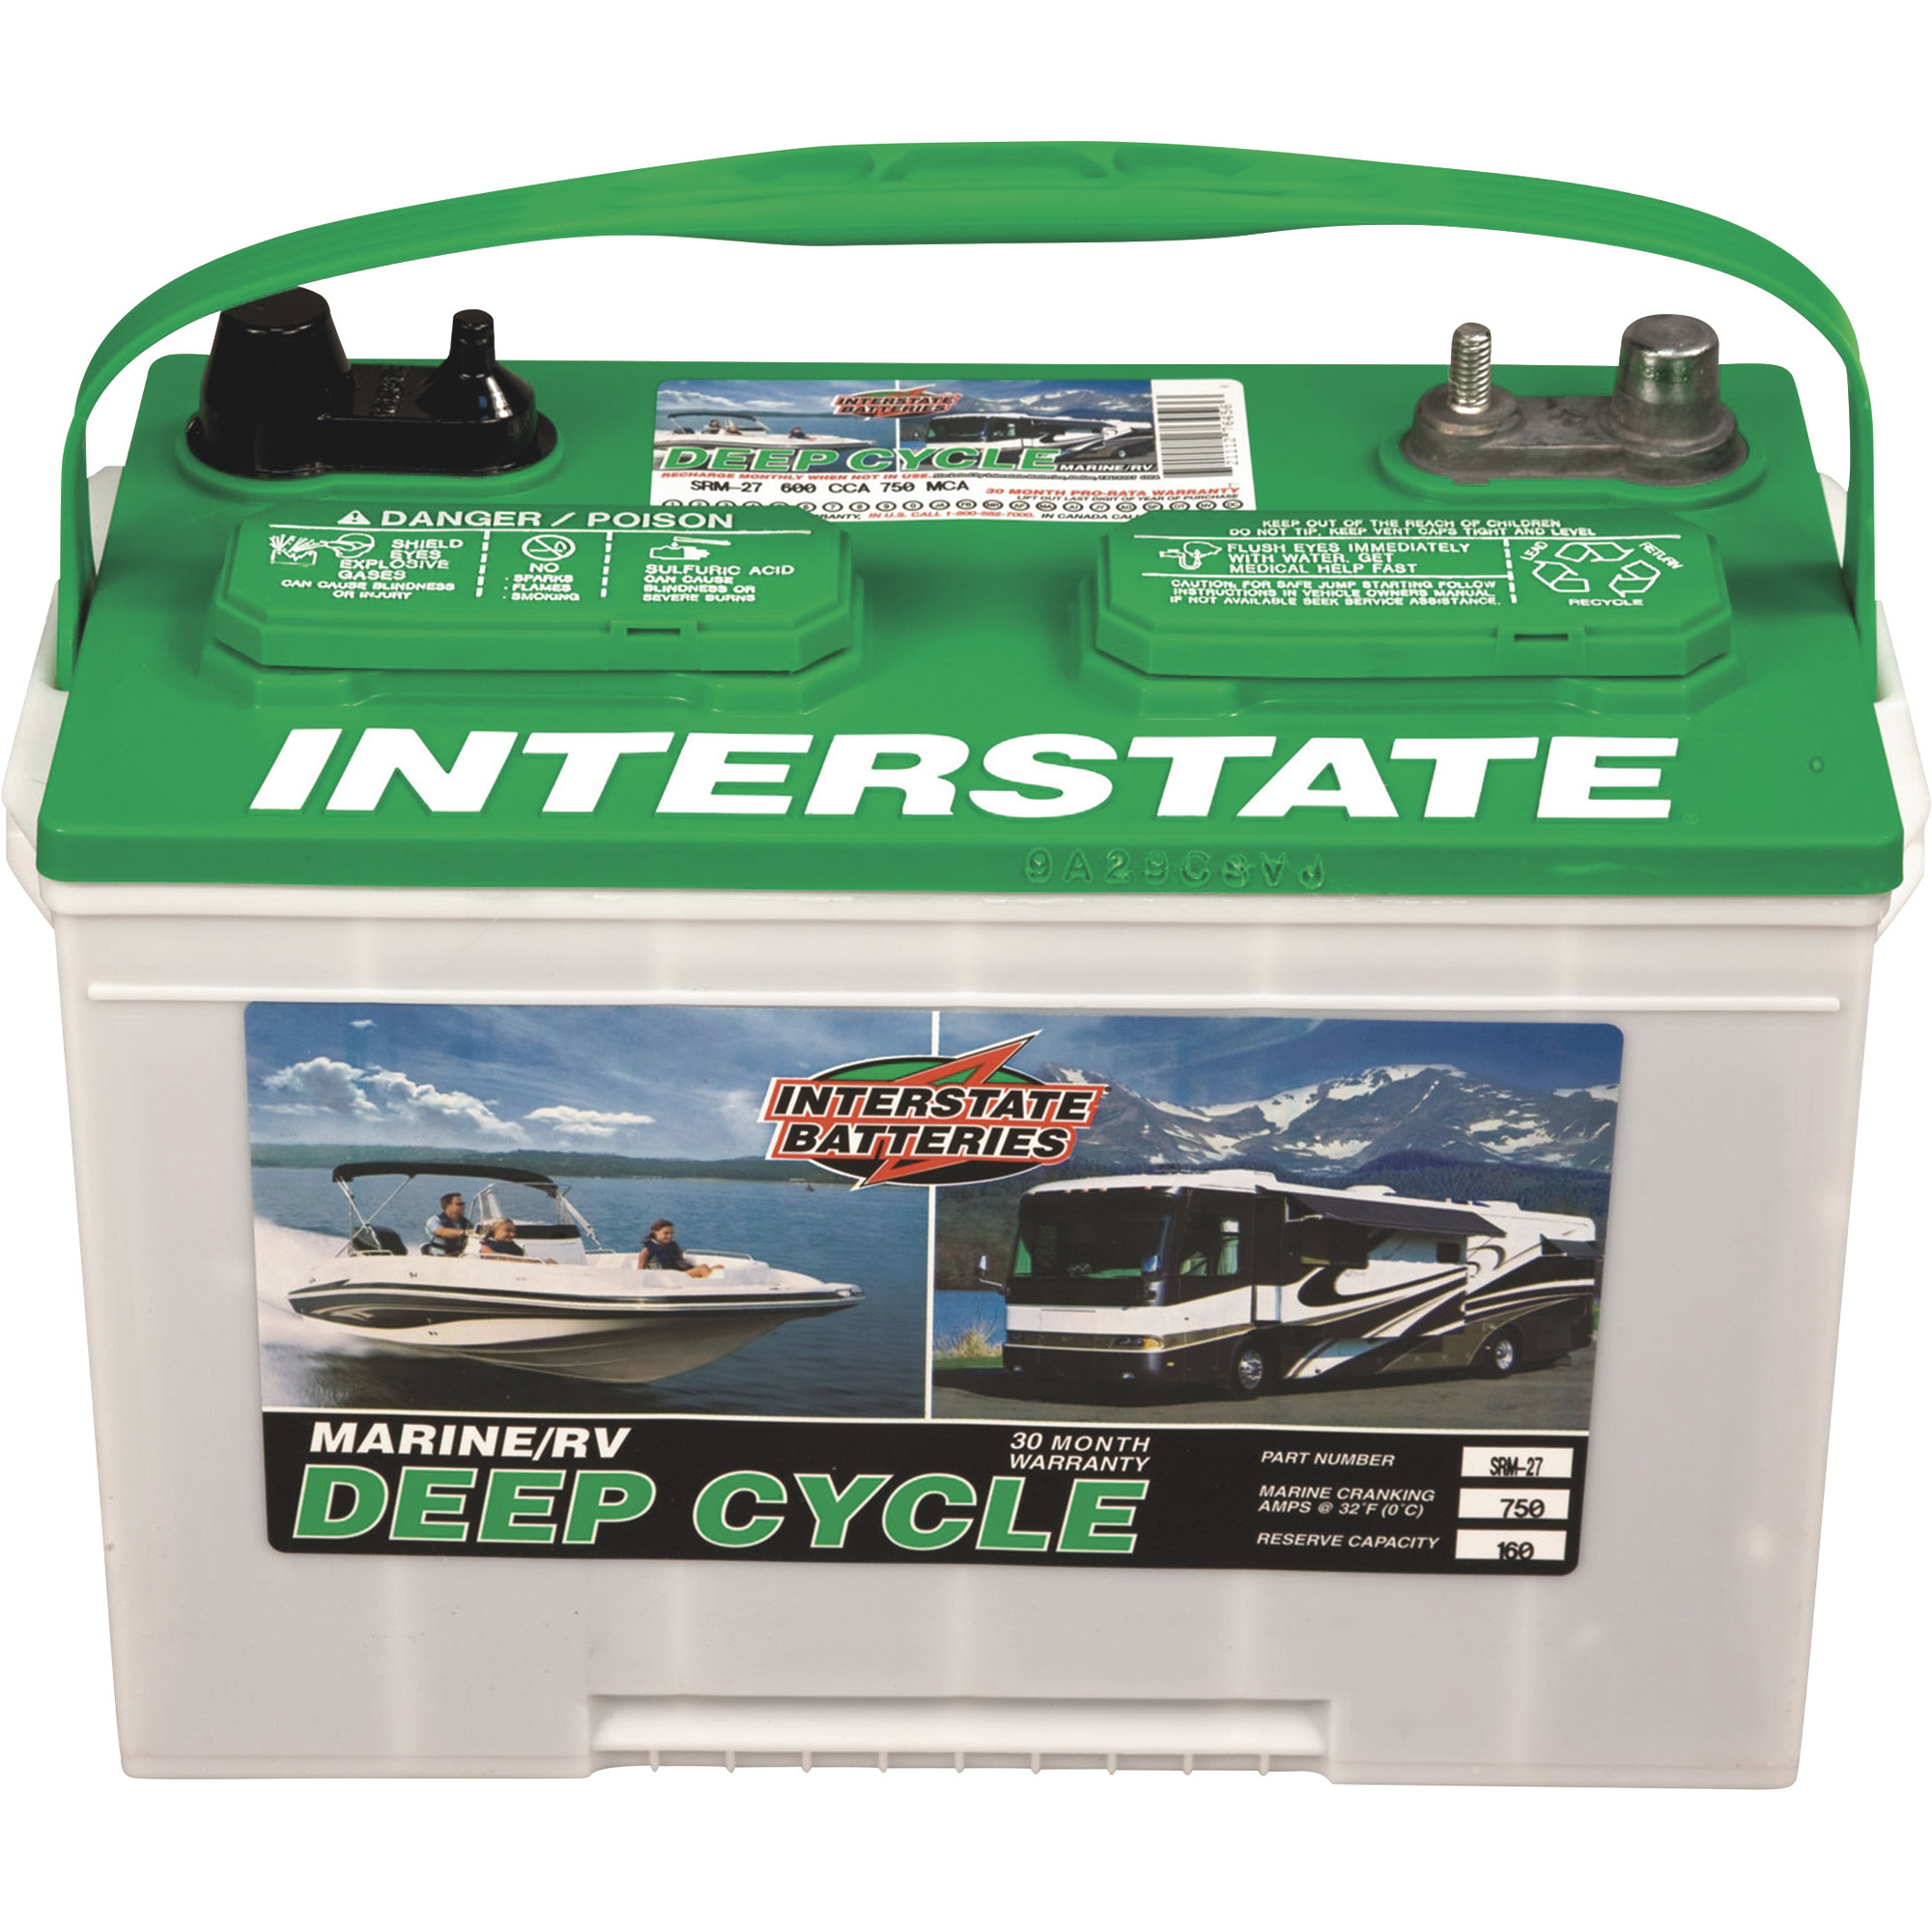 Interstate Batteries Marine/RV Deep Cycle Battery, Group Size 27M, 12 Volt, Sealed Lead Acid, Model SRM-27